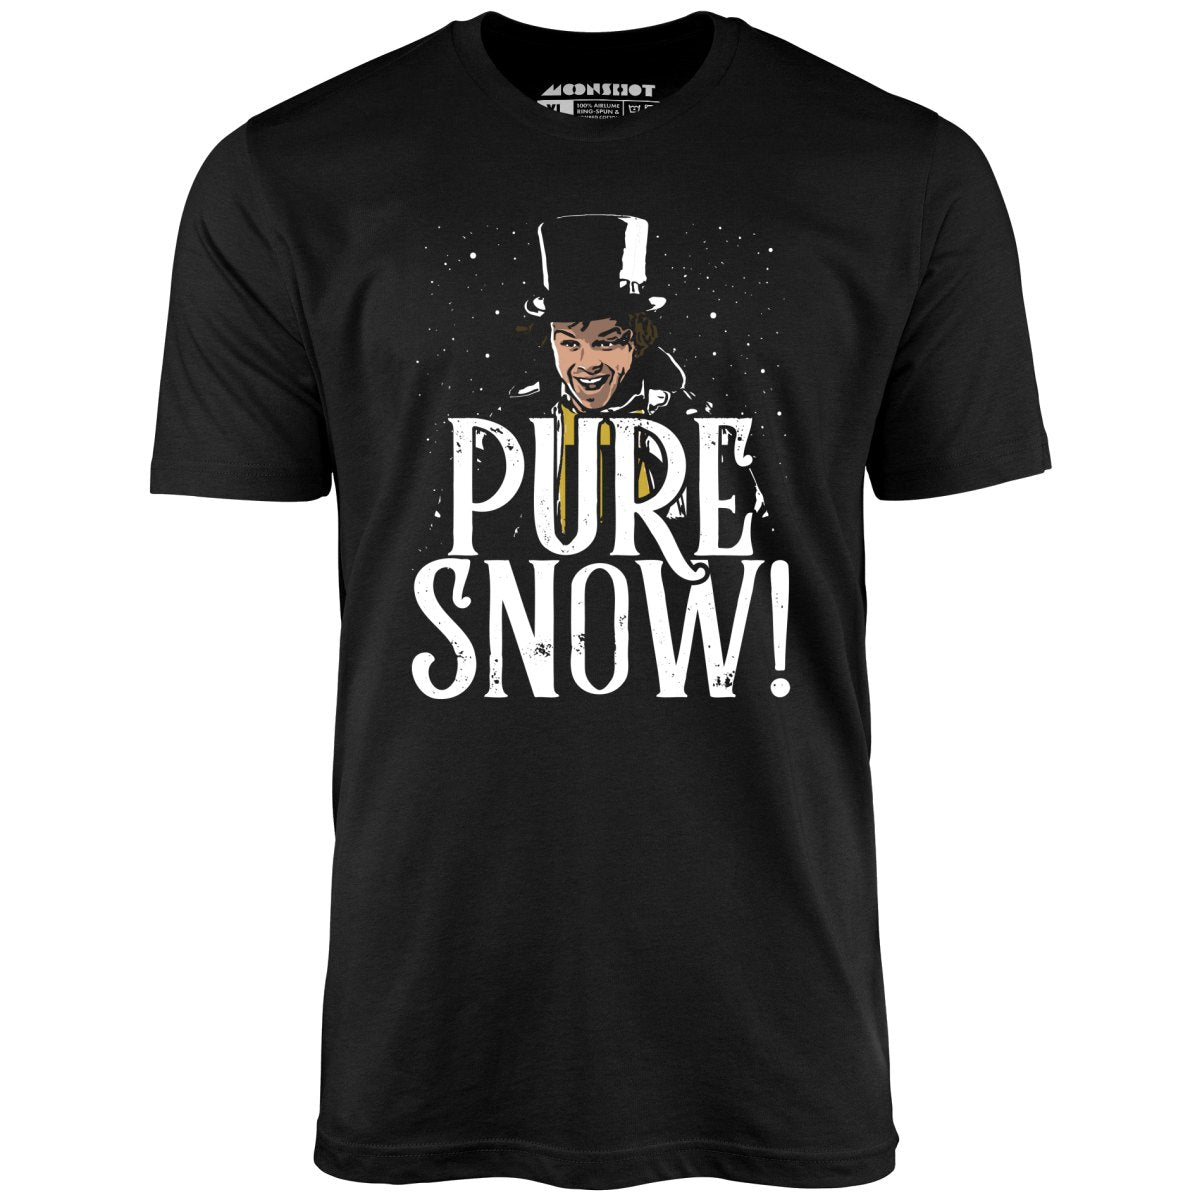 Charles DeMar - Pure Snow! - Unisex T-Shirt